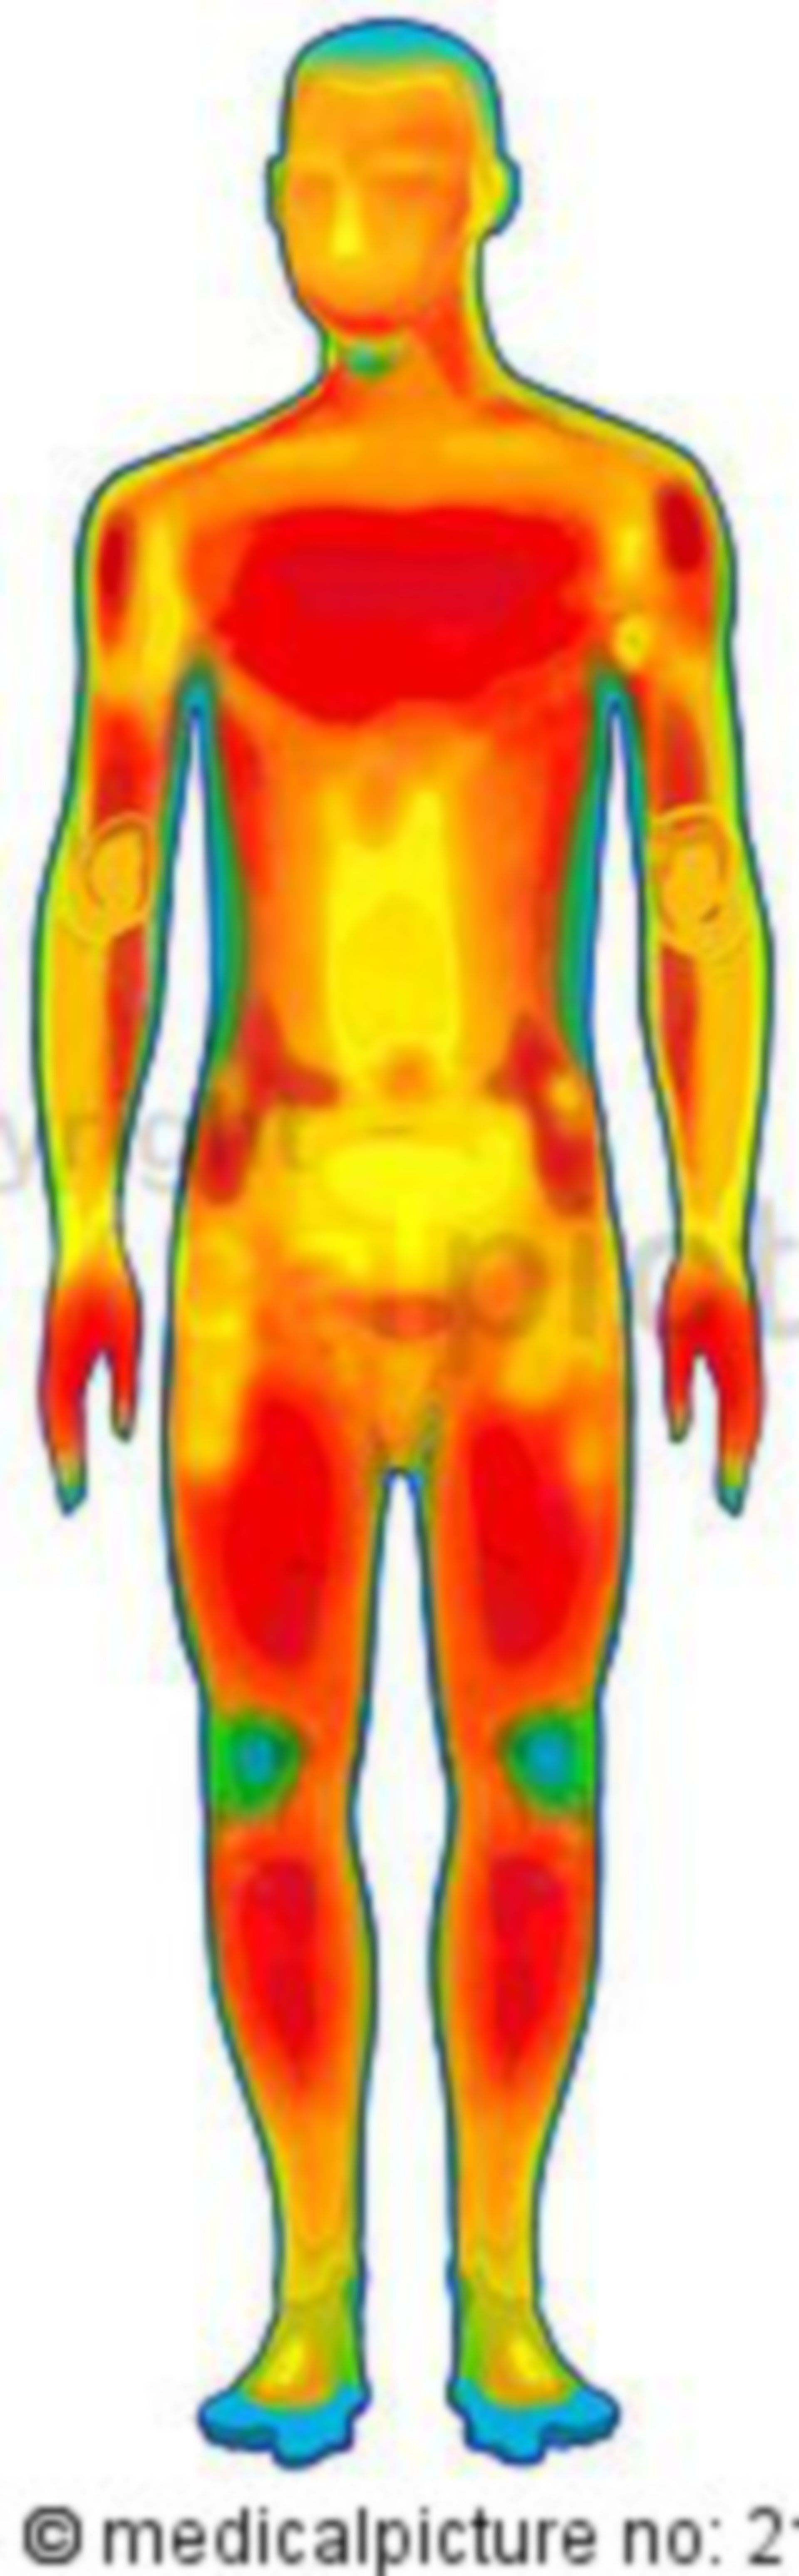  Nackter Mann mit Temperaturzonen, naked man with different temperature 
